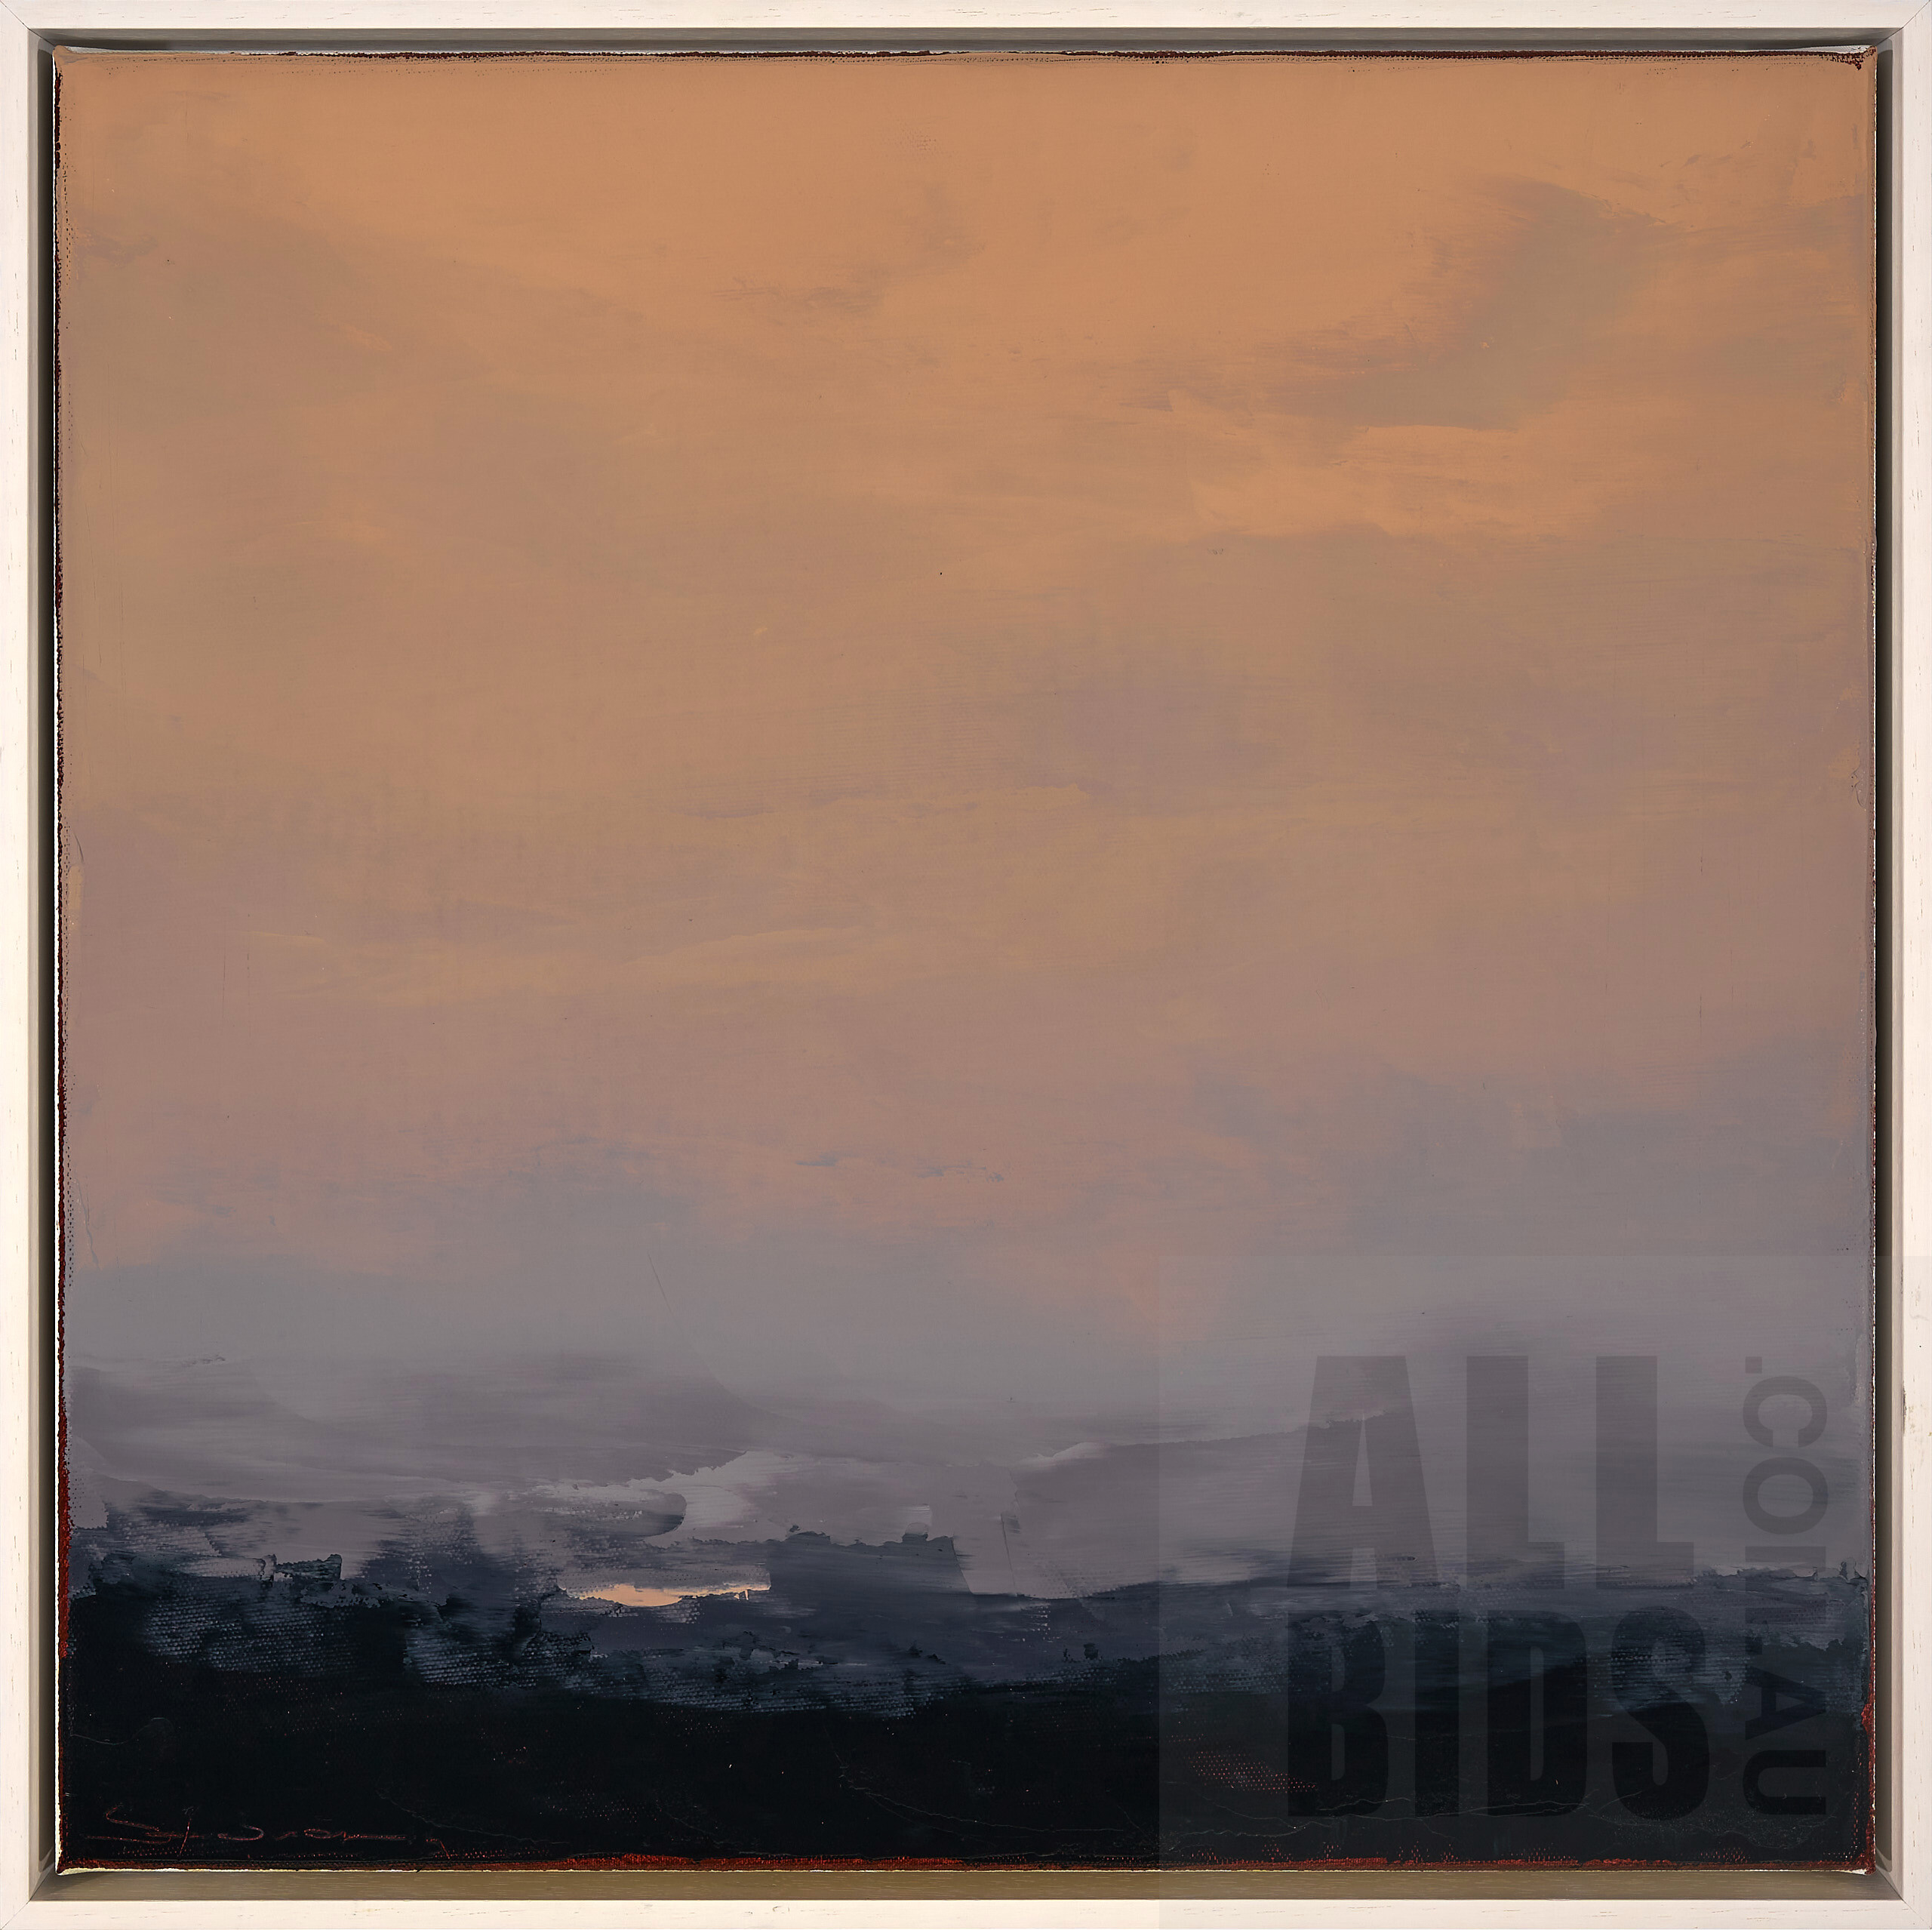 'Sokquon Tran (born 1969), Smoke Haze I, Southern Highlands, Oil on Canvas, 48.5 x 48.5 cm'